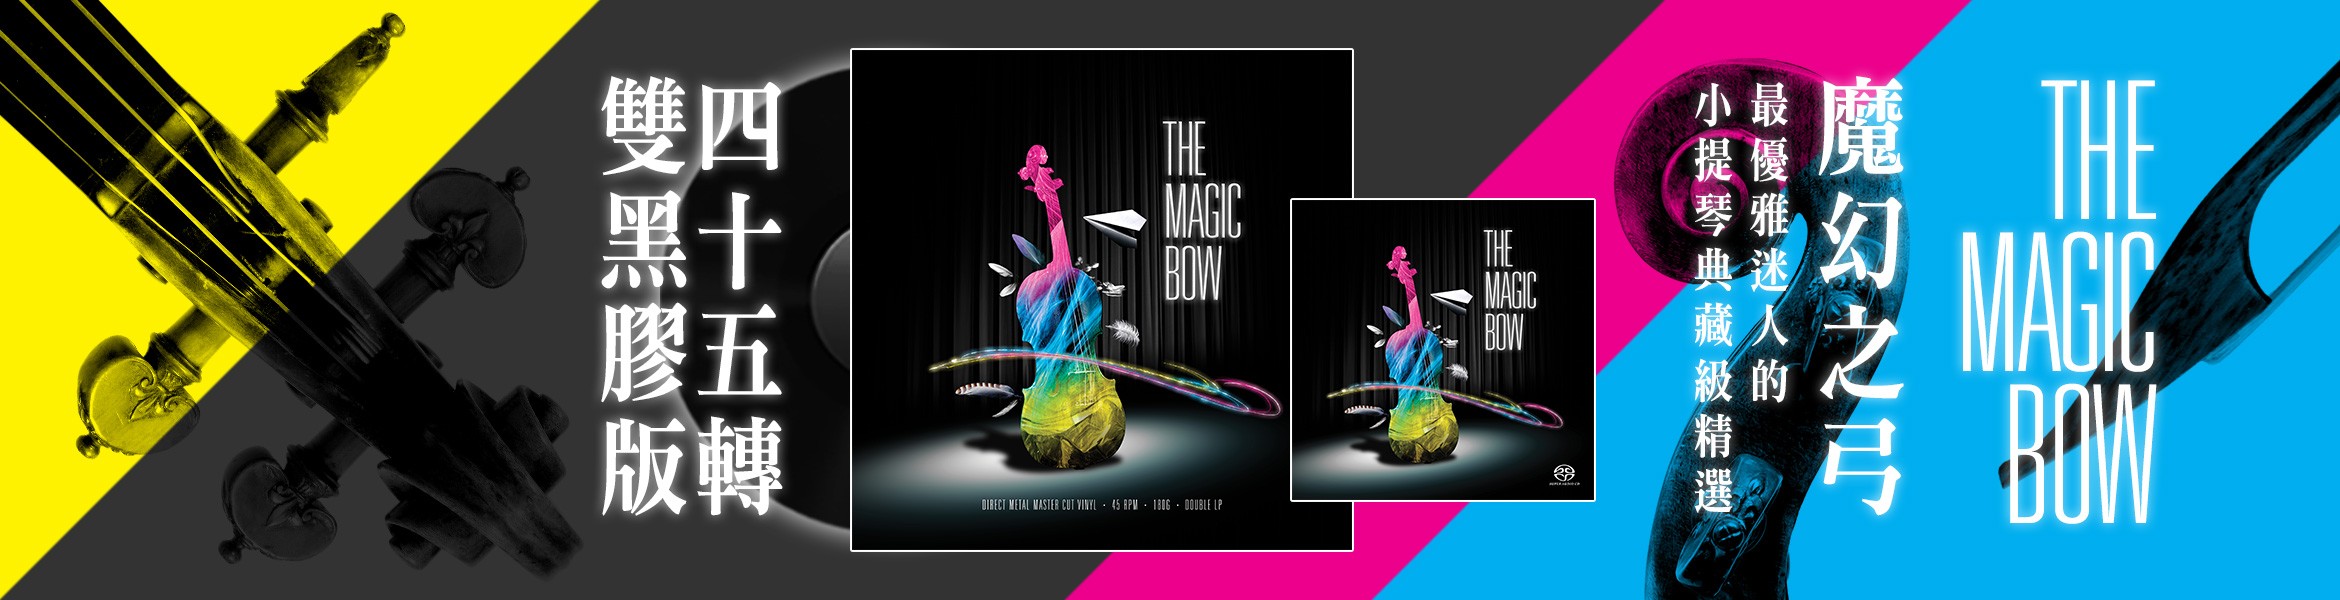 2020-08 Magic Bow LP